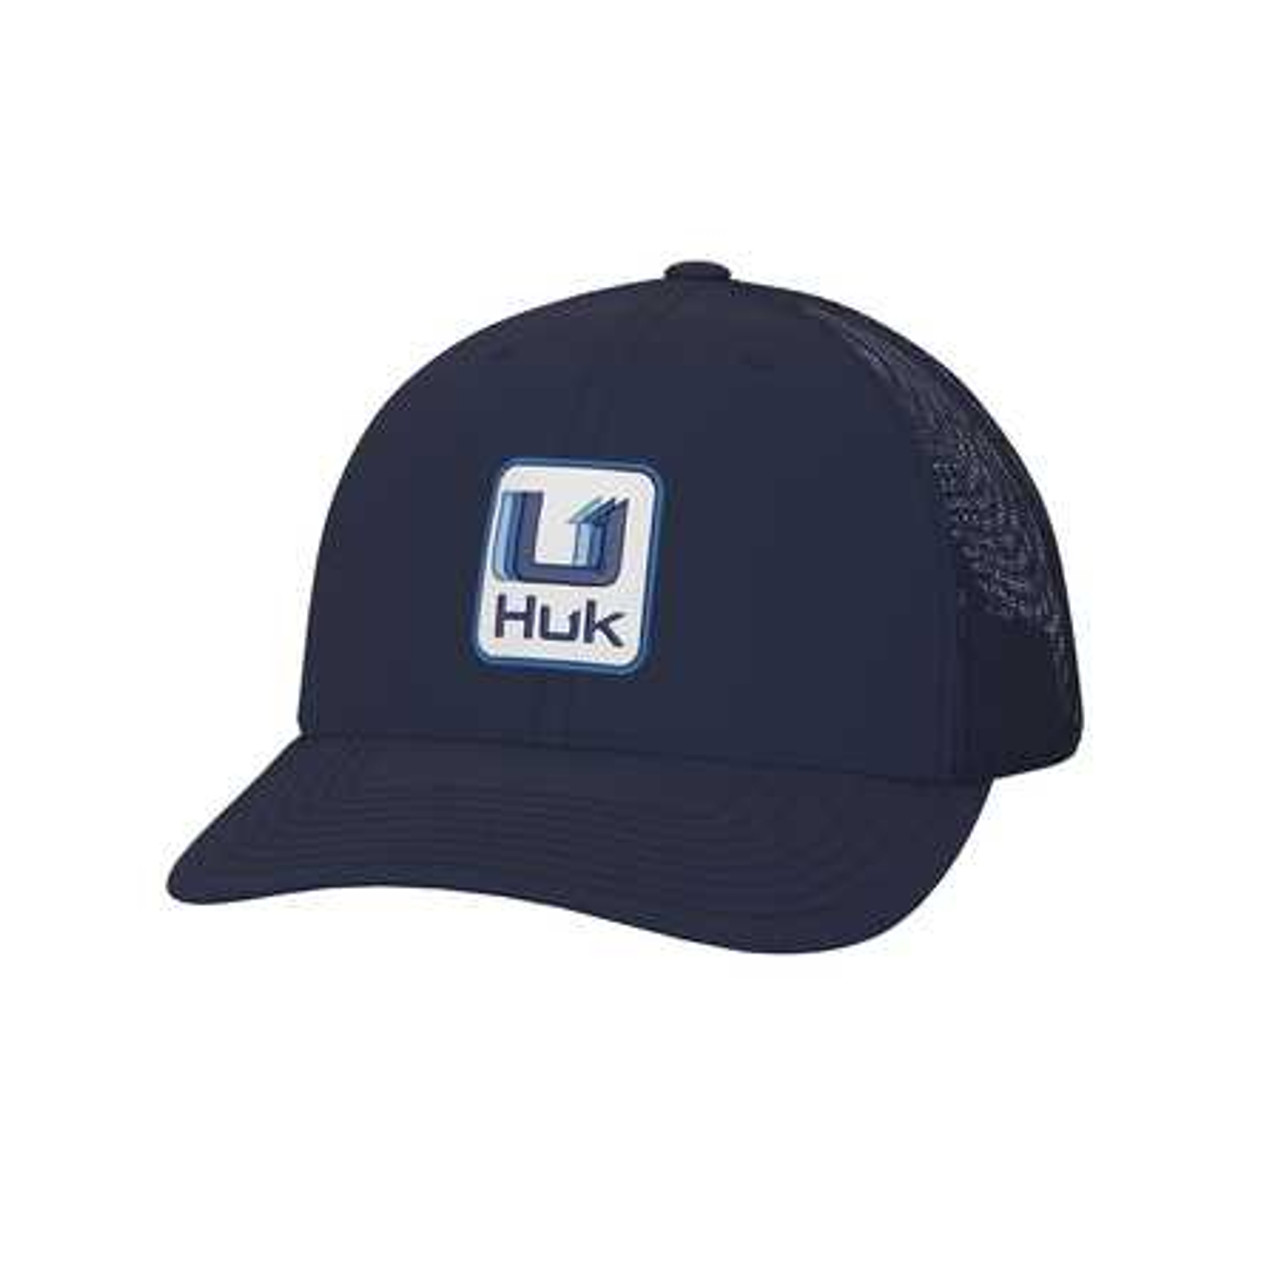 Men's Huk Unstructured Performance Adjustable Hat Night Owl